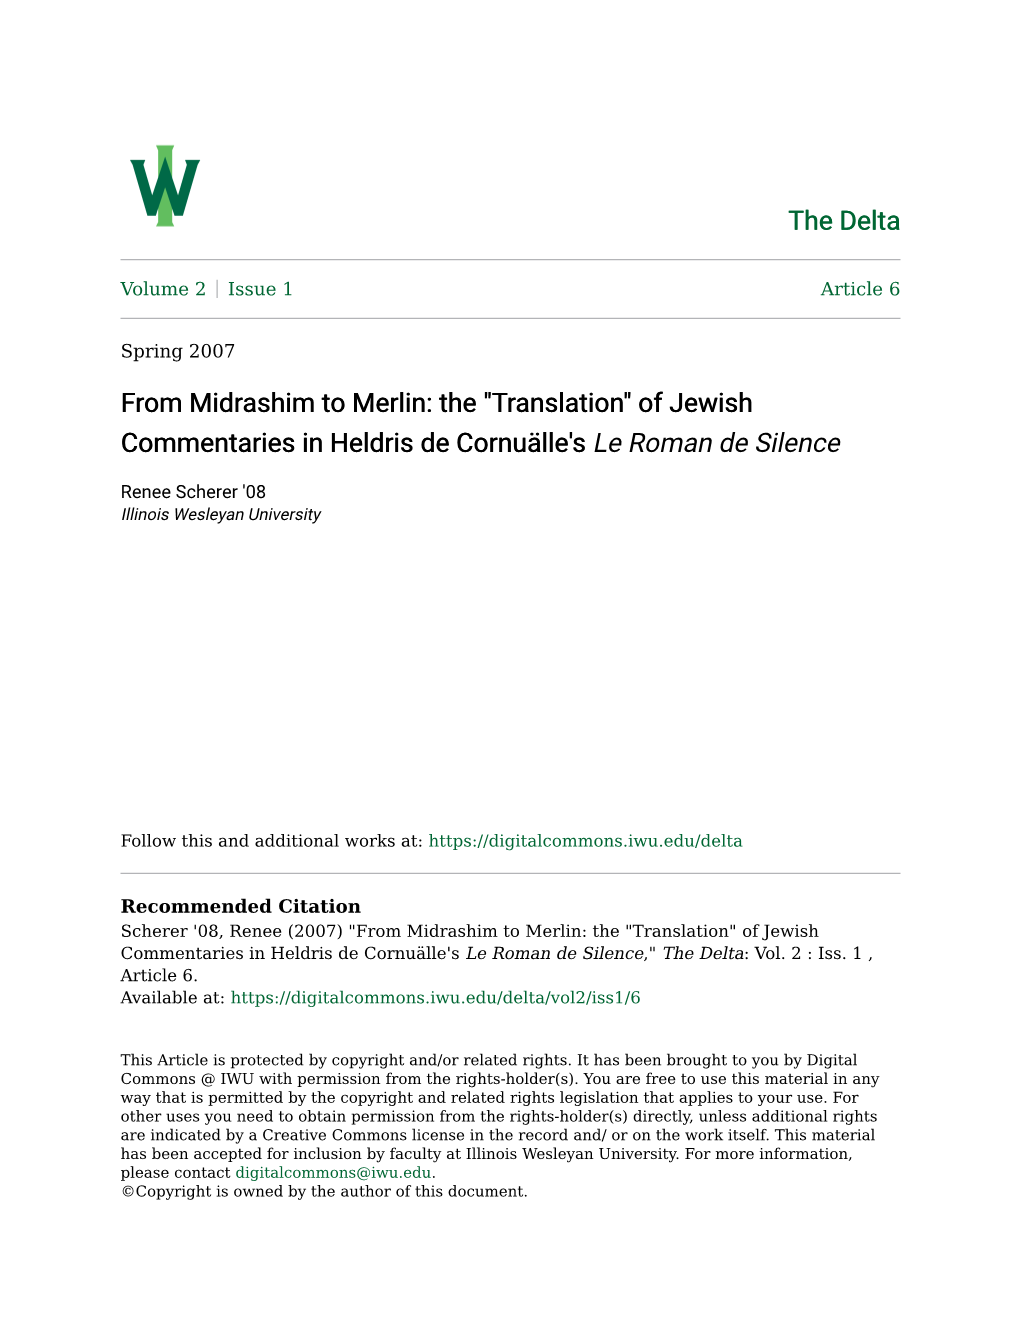 From Midrashim to Merlin: the "Translation" of Jewish Commentaries in Heldris De Cornuälle's Le Roman De Silence